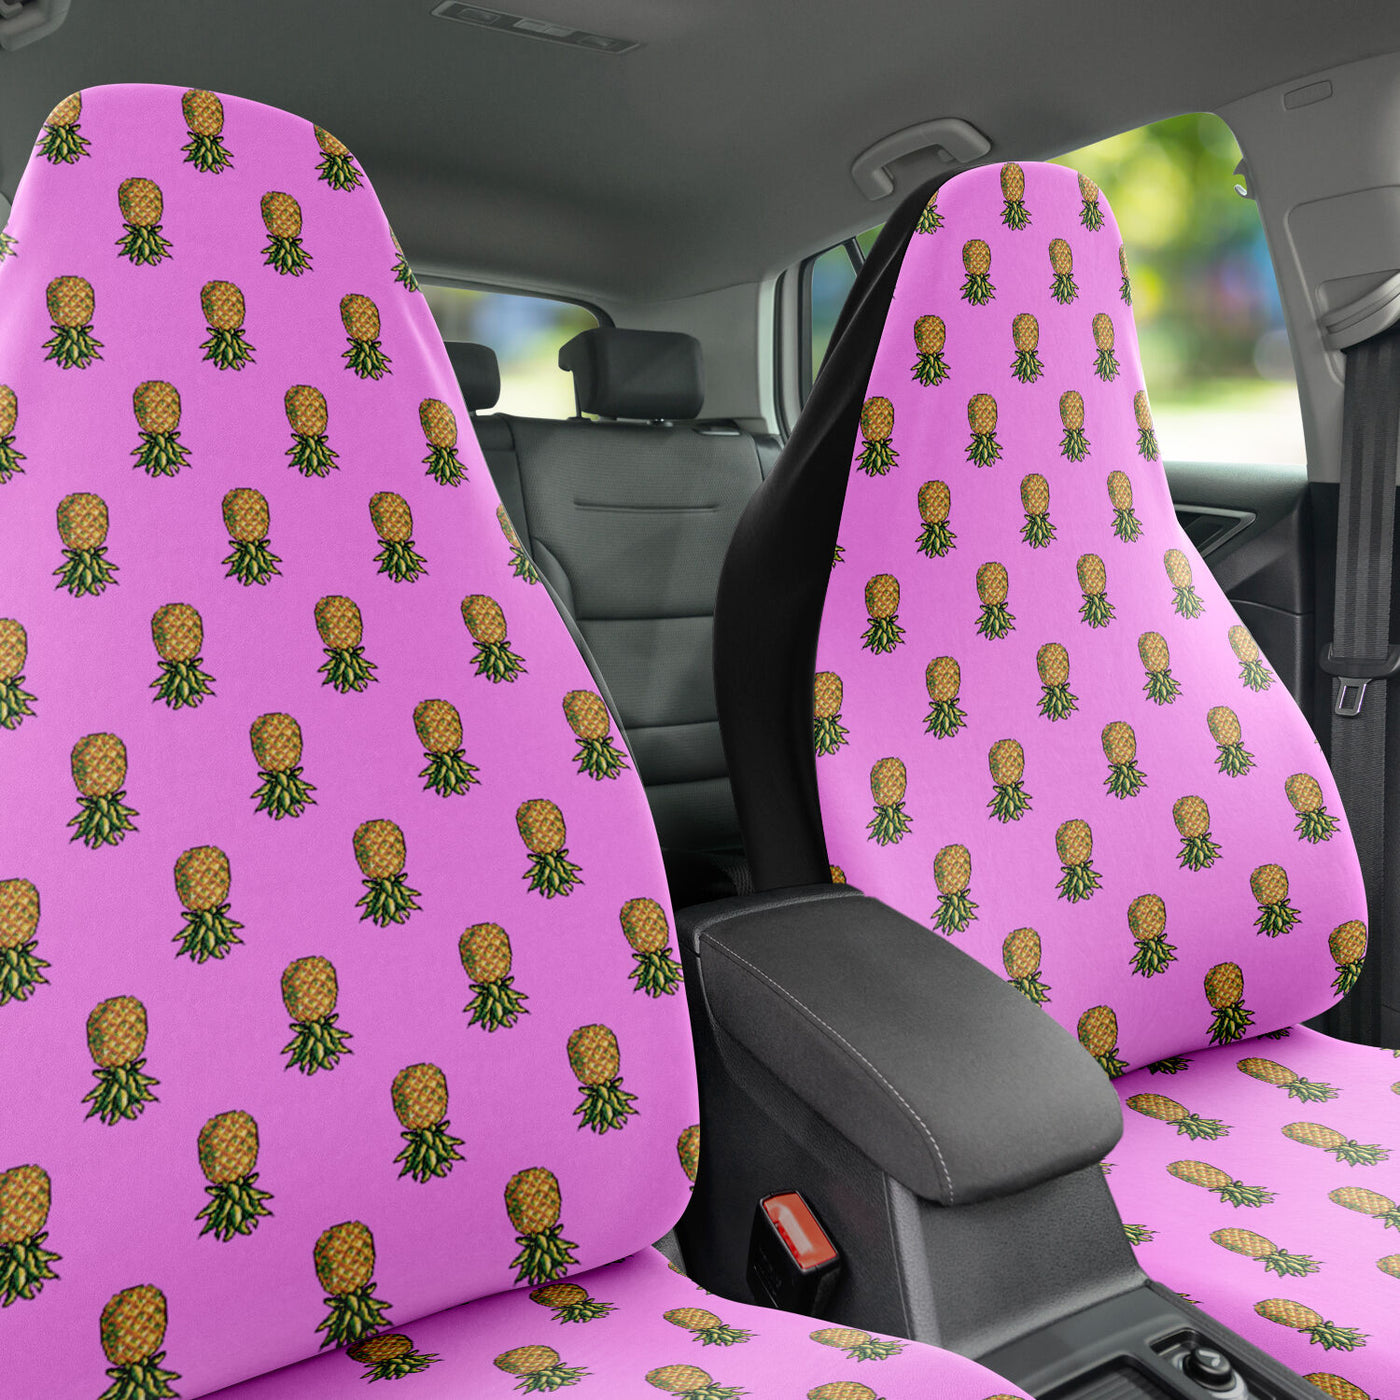 8B-BIT Pink Car Seat Cover